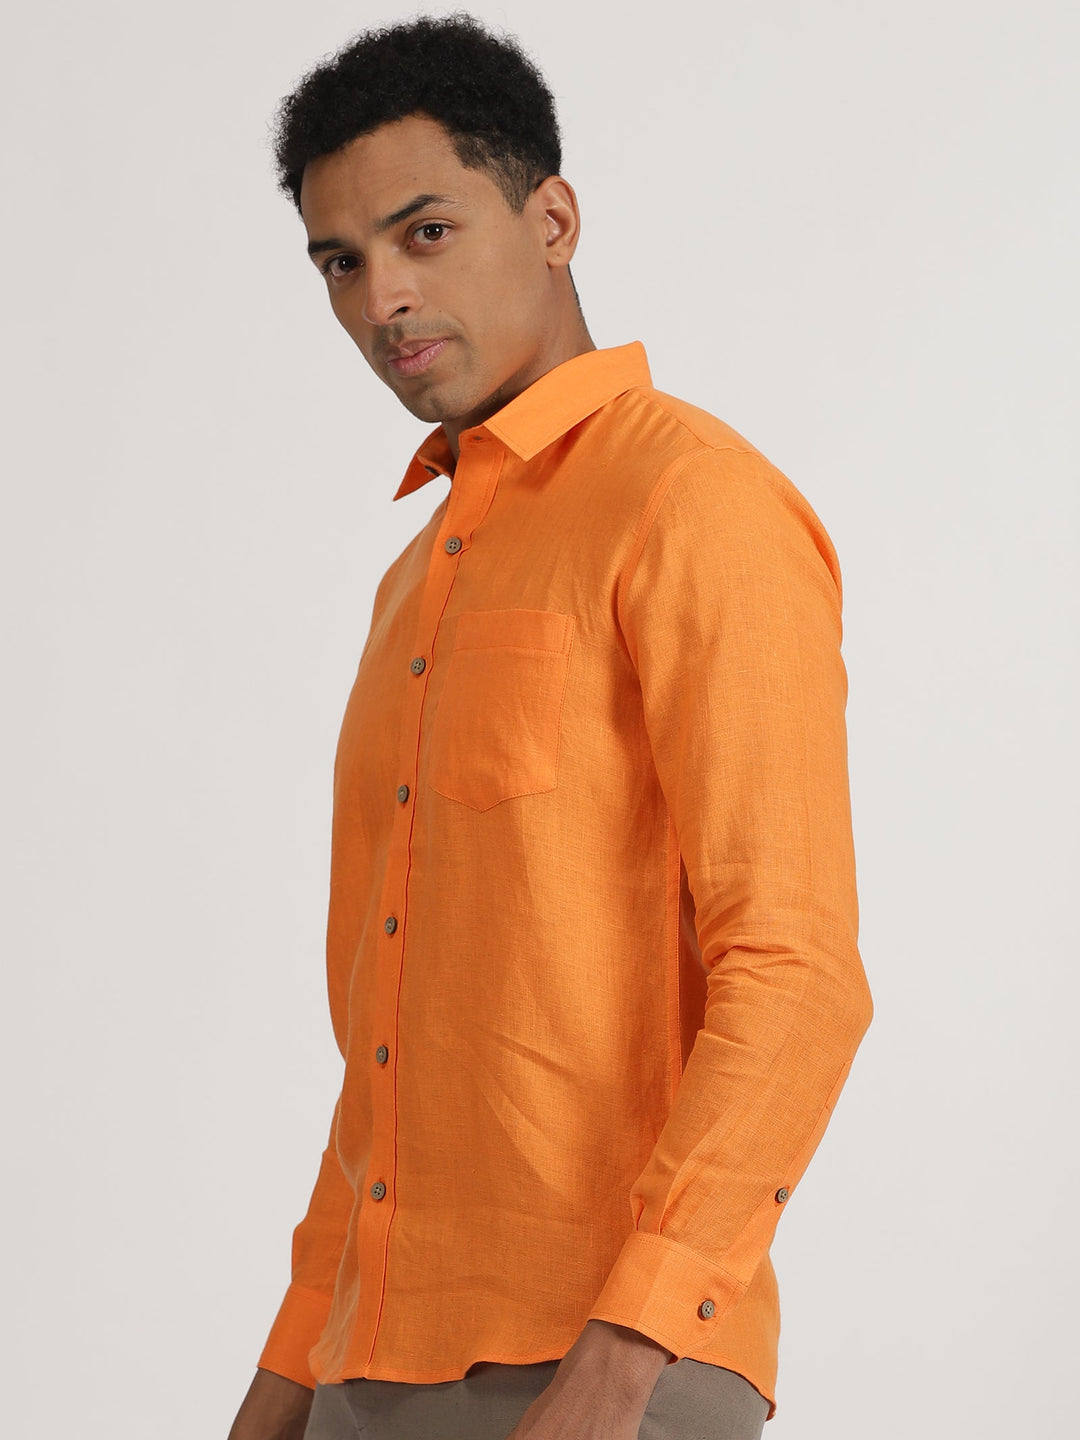 Harvey - Men's Pure Linen Full Sleeve Shirt - Beer Orange | Rescue